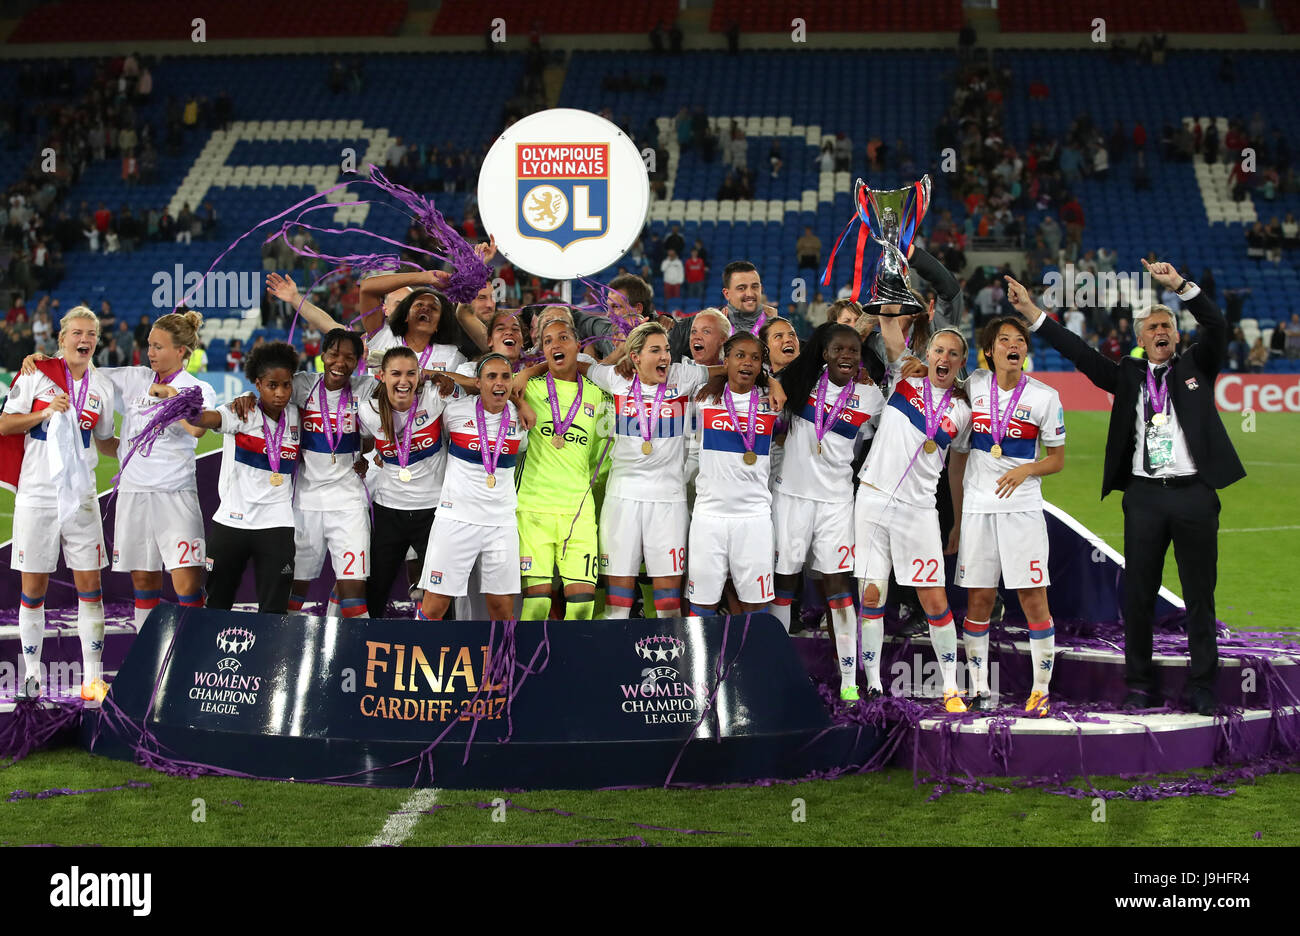 2017 women's champions league final